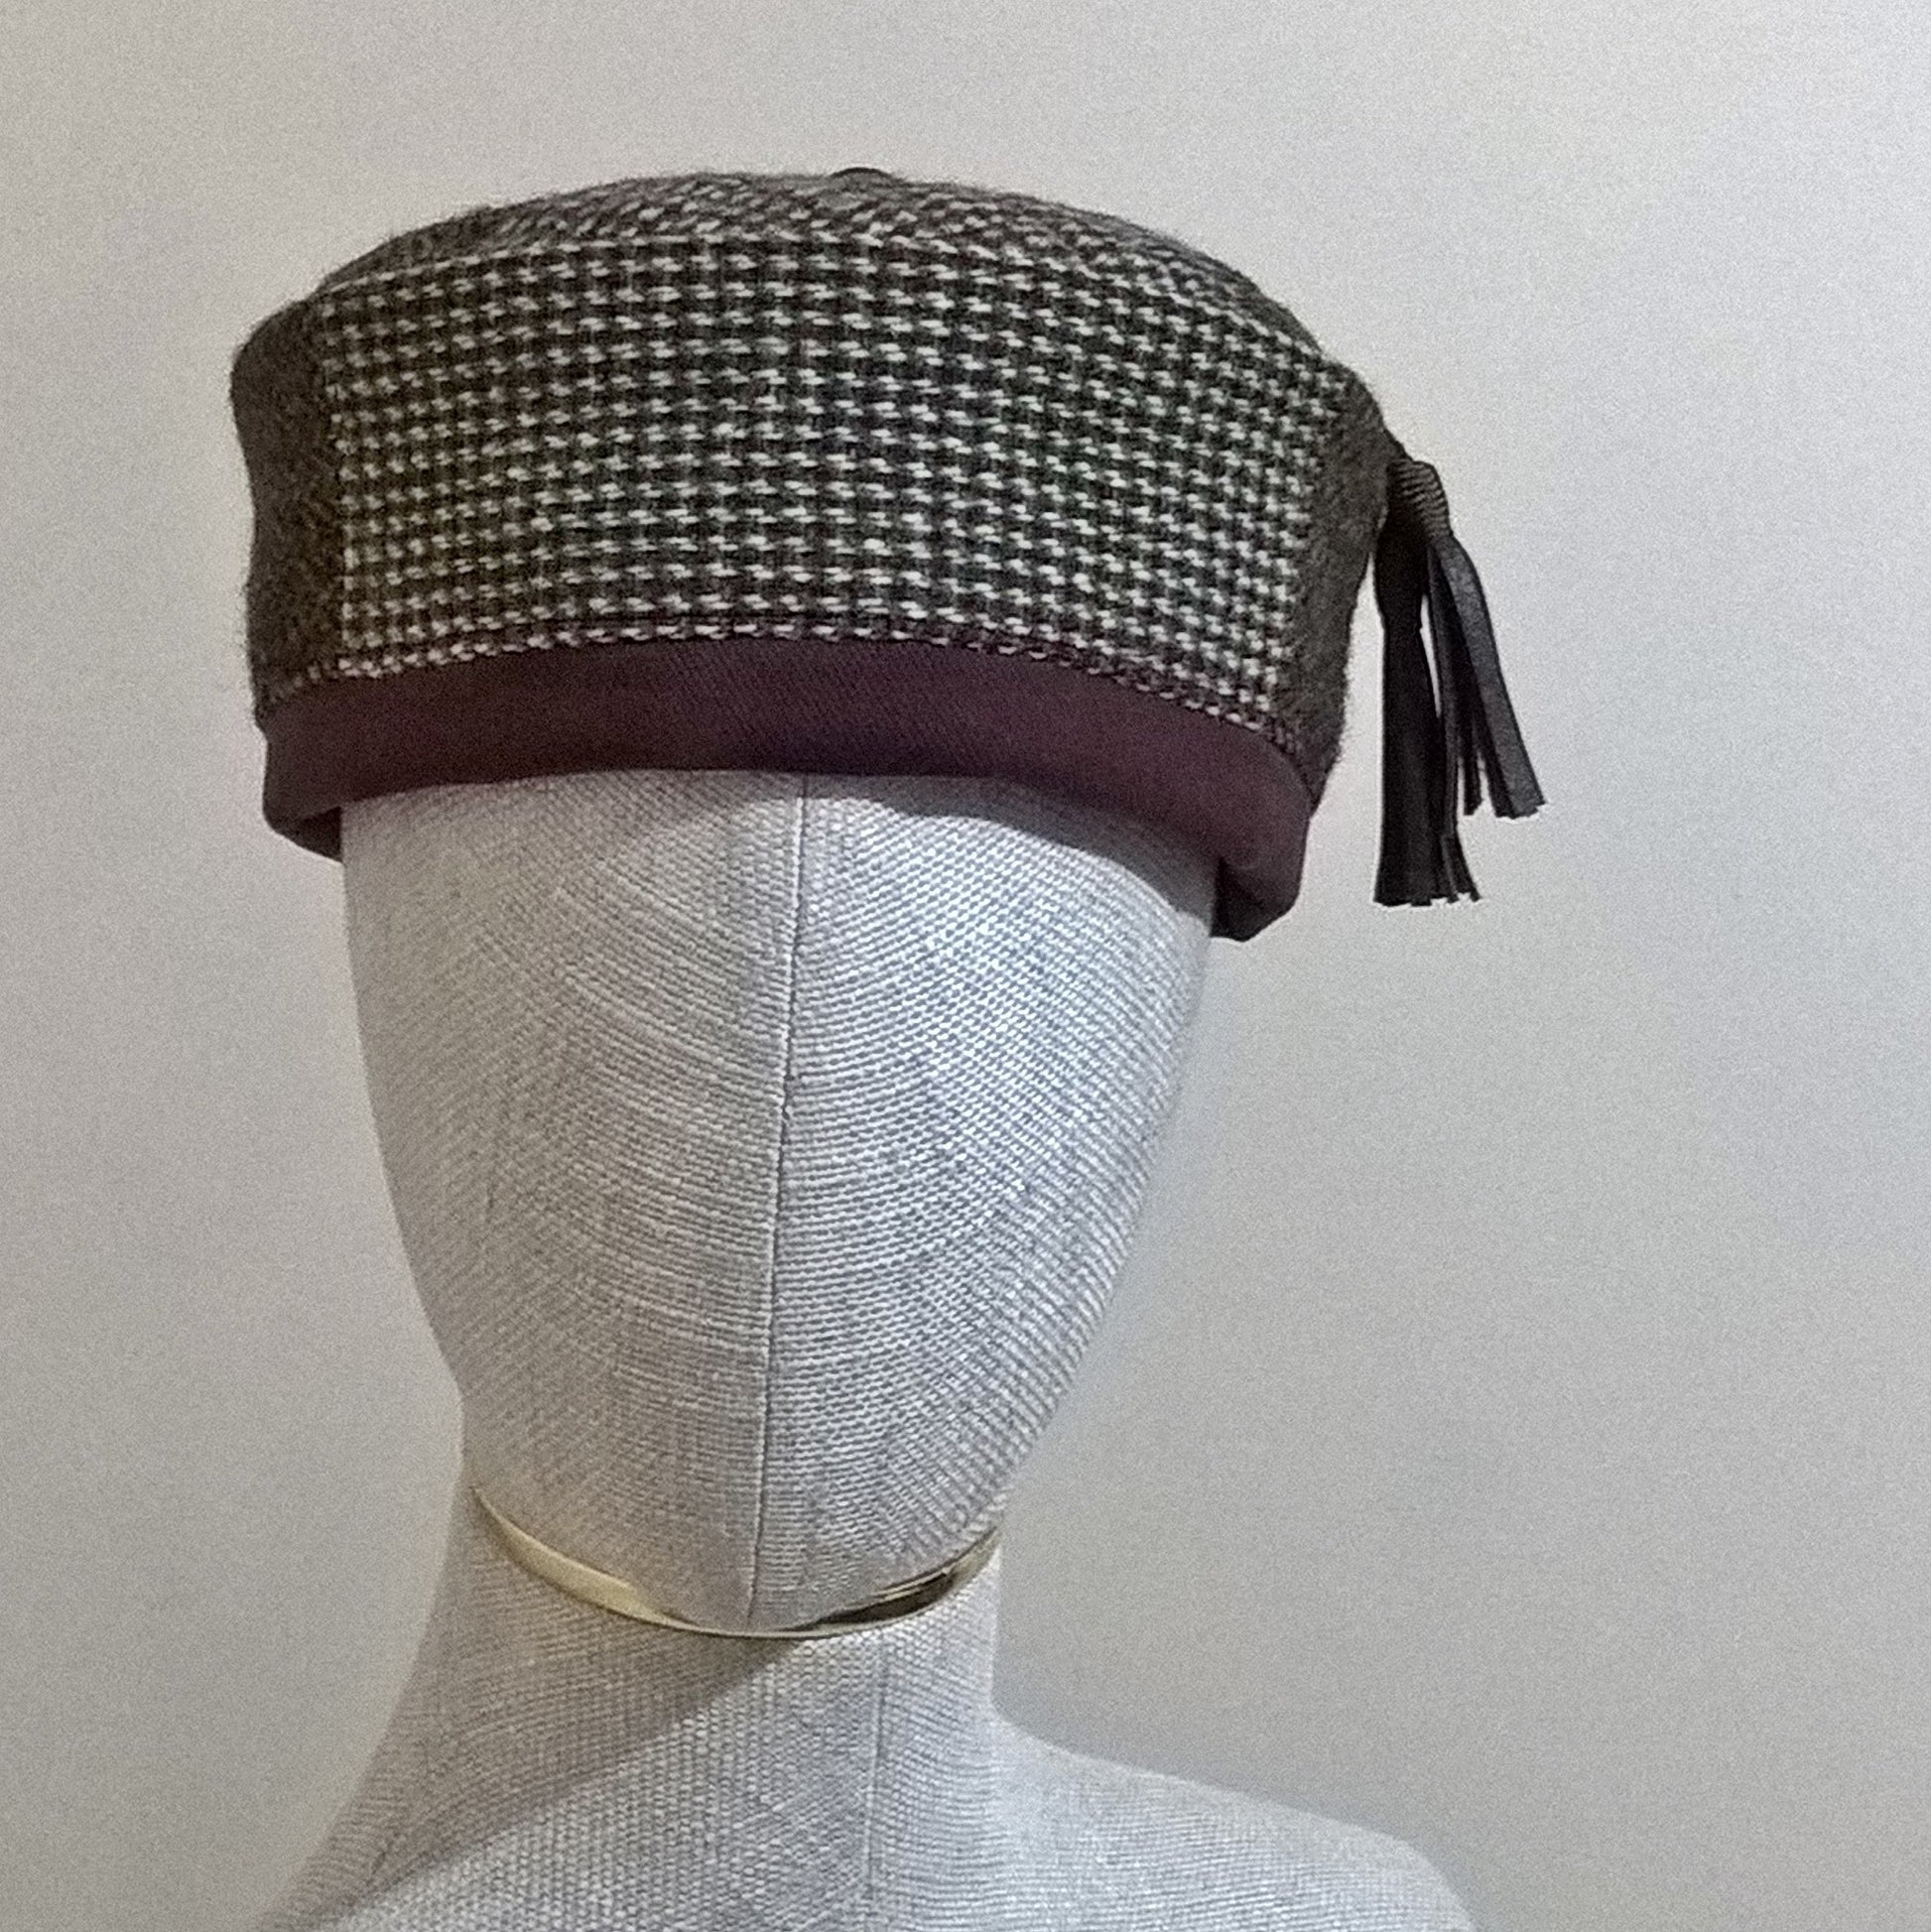 Mismatch Harris Tweed wool smoking cap handmade with leather tassel